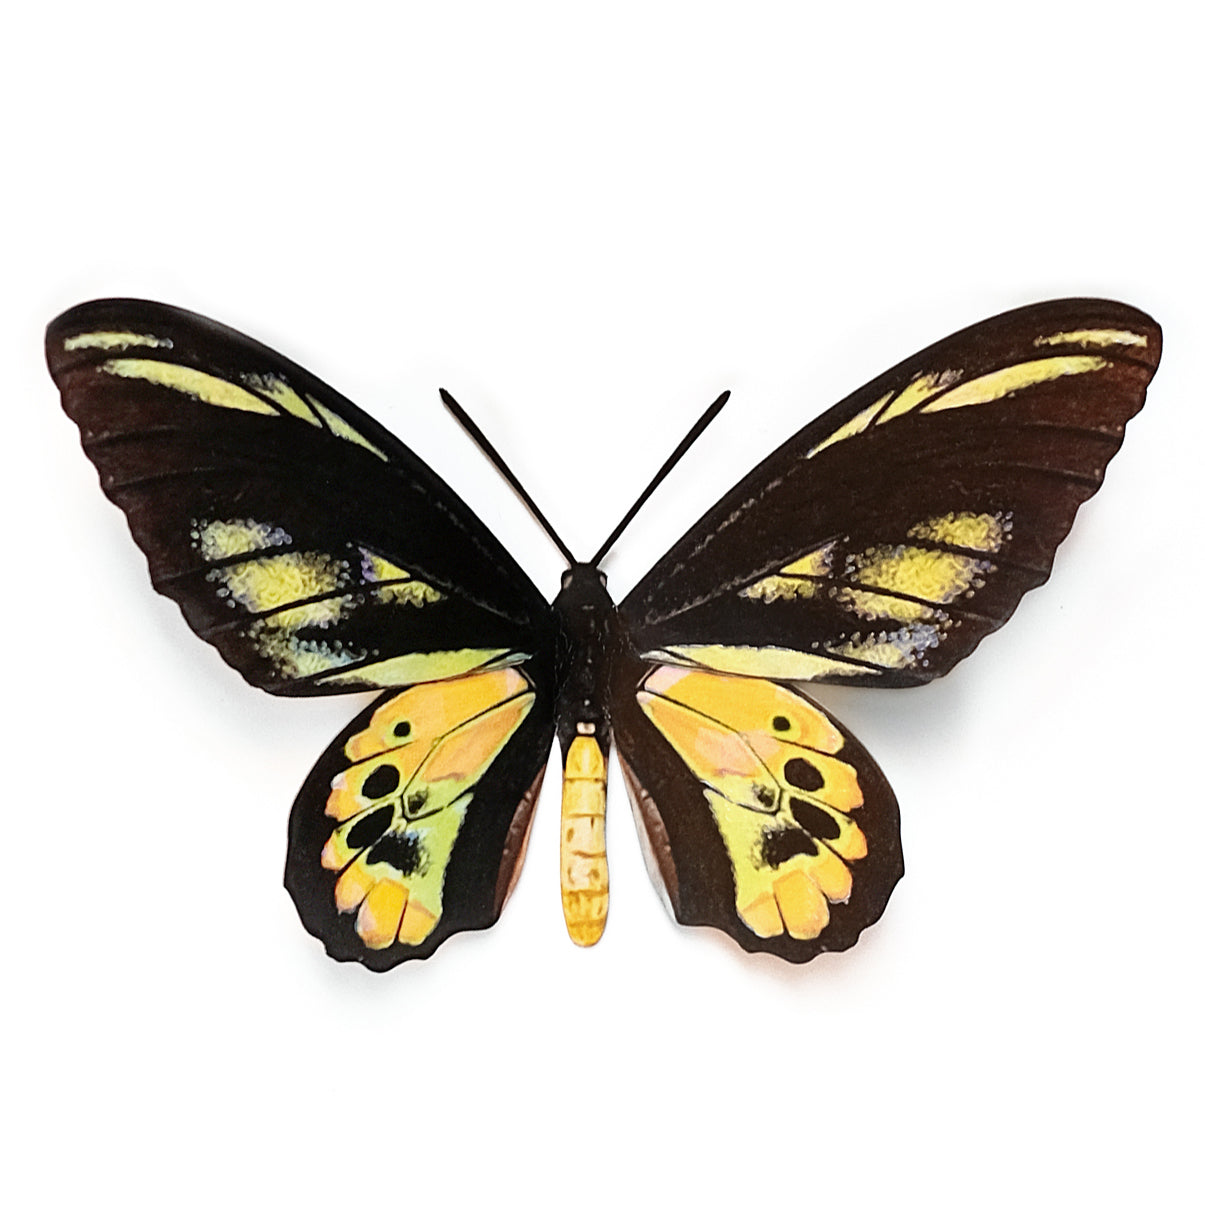 'Rothschild Birdwing' Butterfly